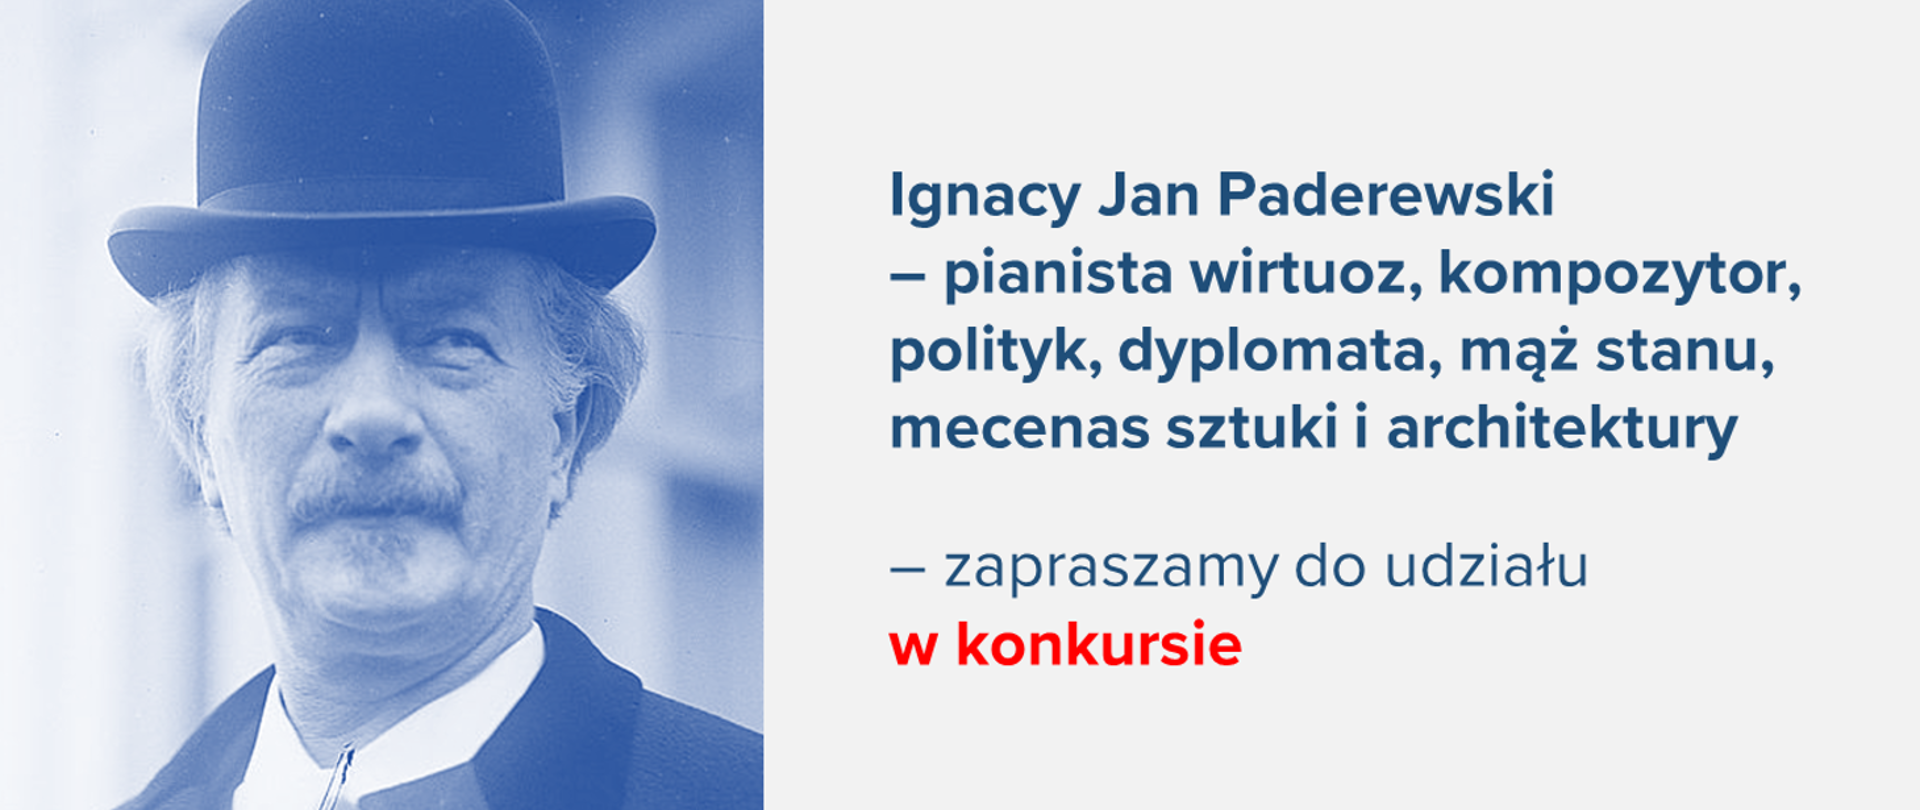 Konkurs o Paderewskim